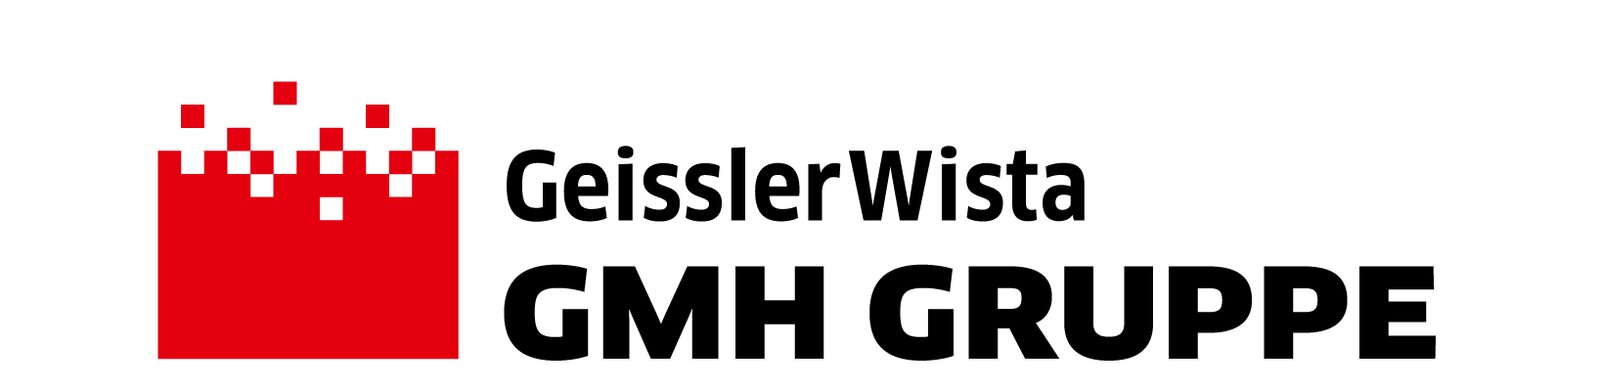 GMH_GeisslerWista_Logo_RGB.jpg